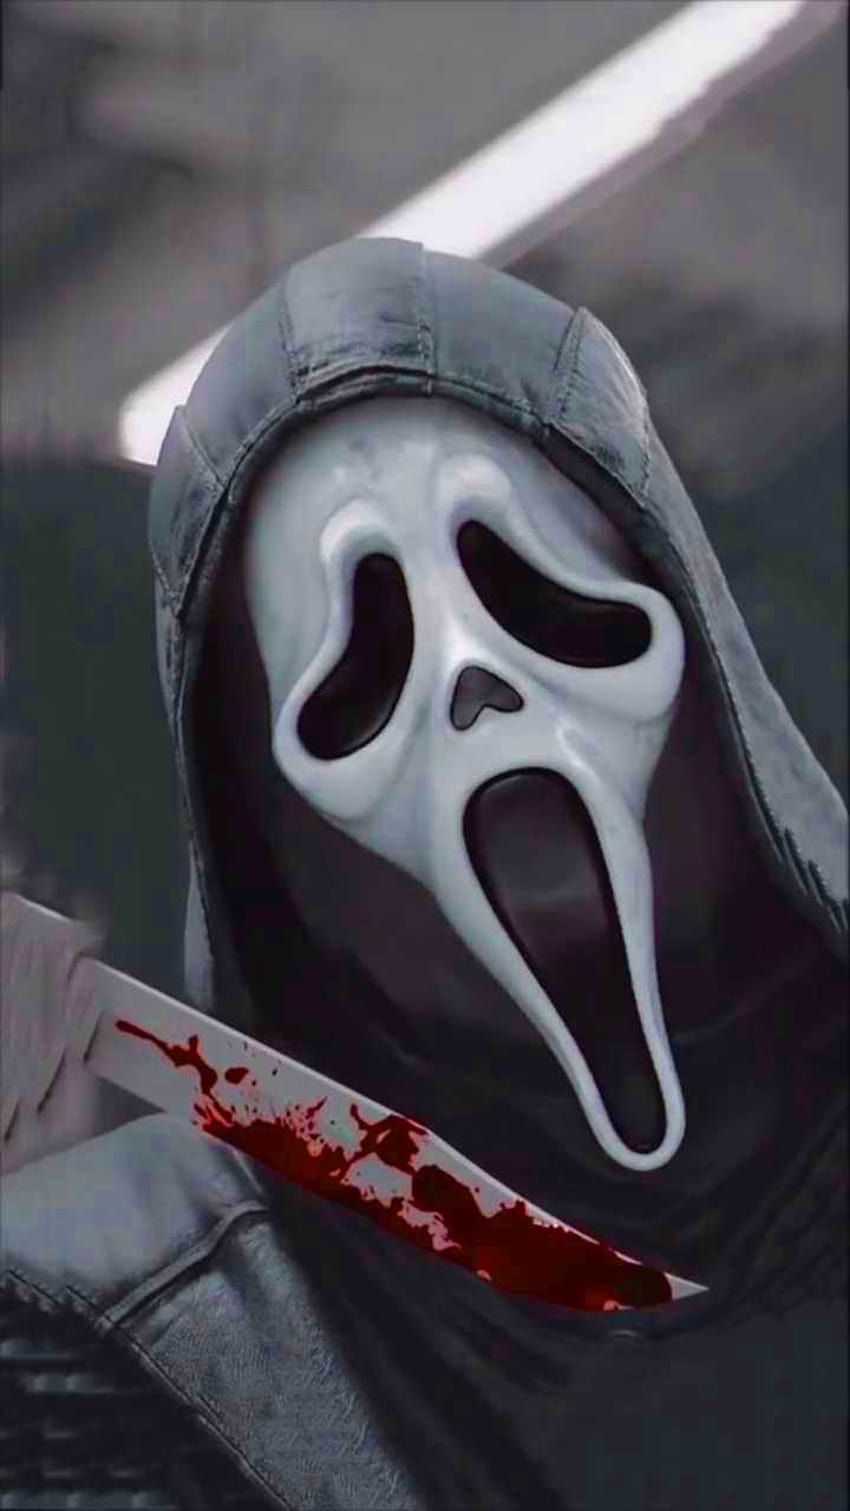 Scream the mask of silence - Ghostface